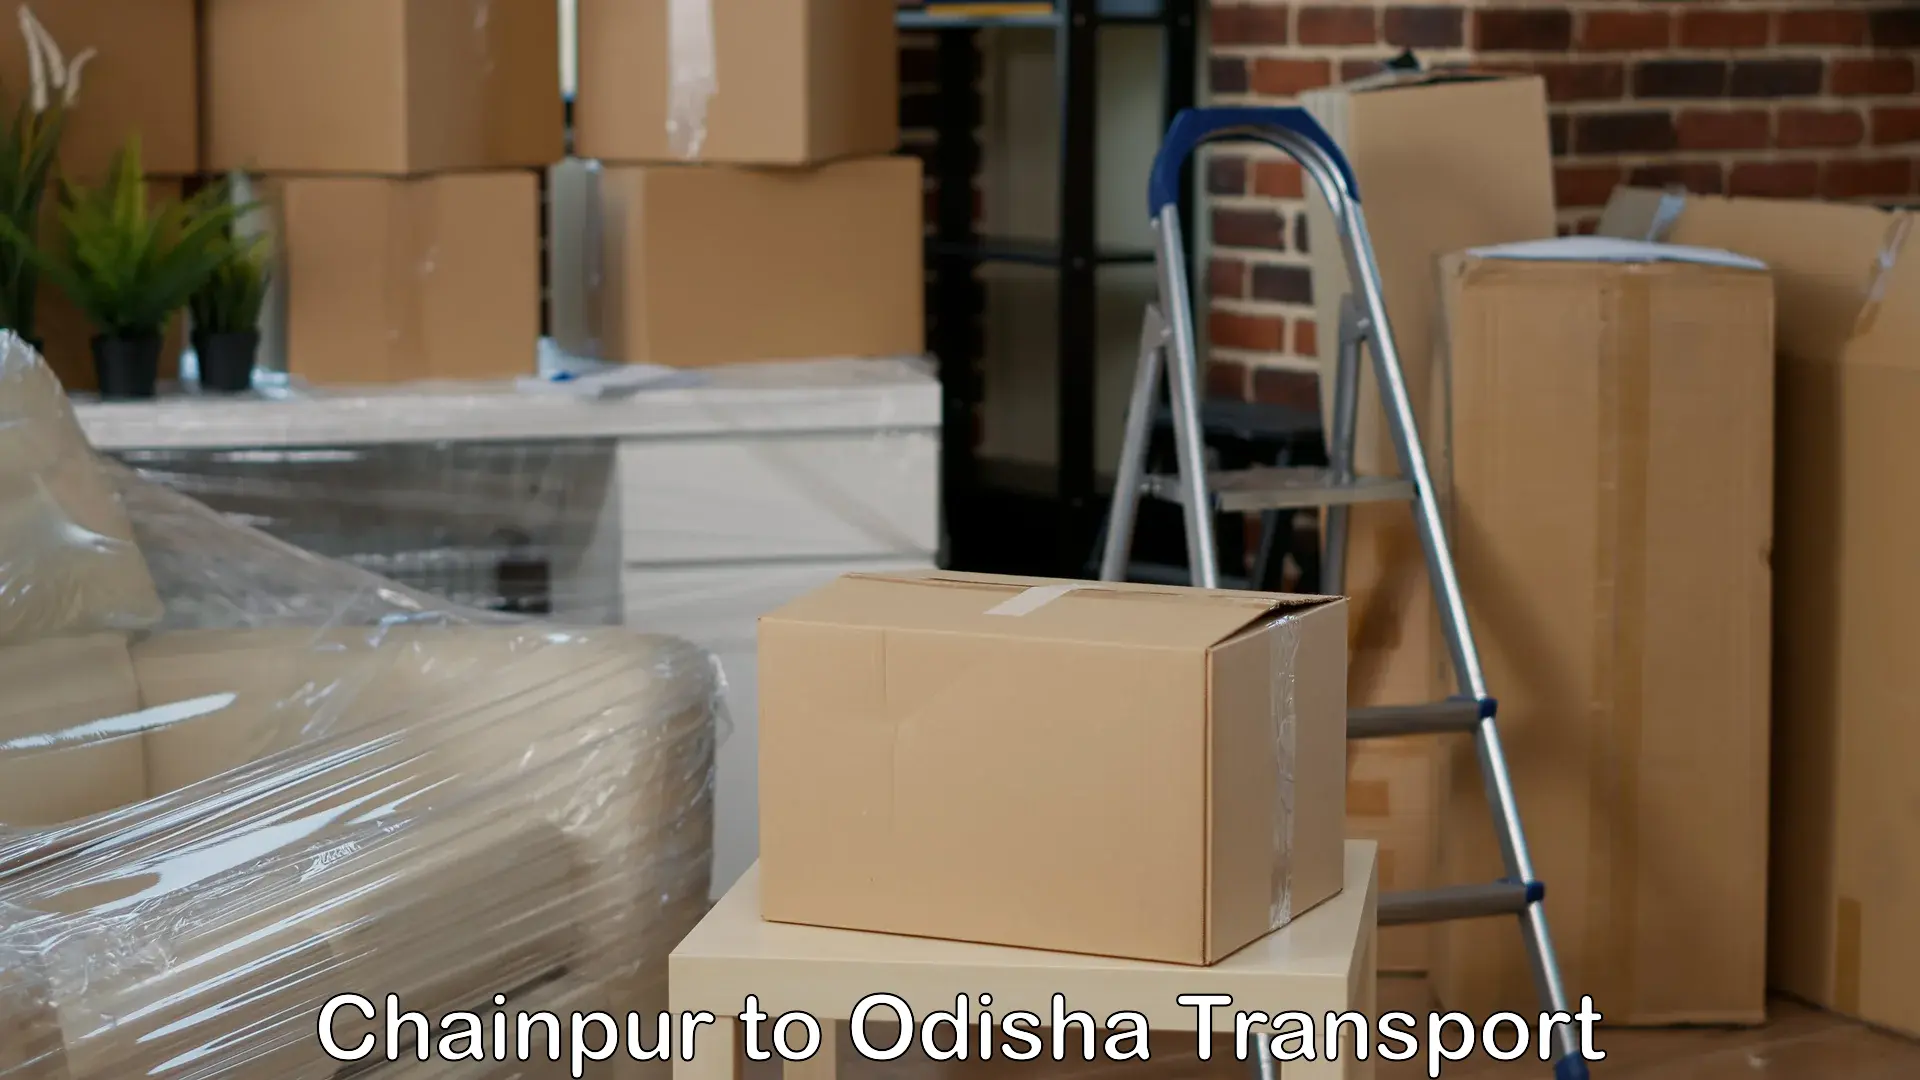 Truck transport companies in India Chainpur to Konark